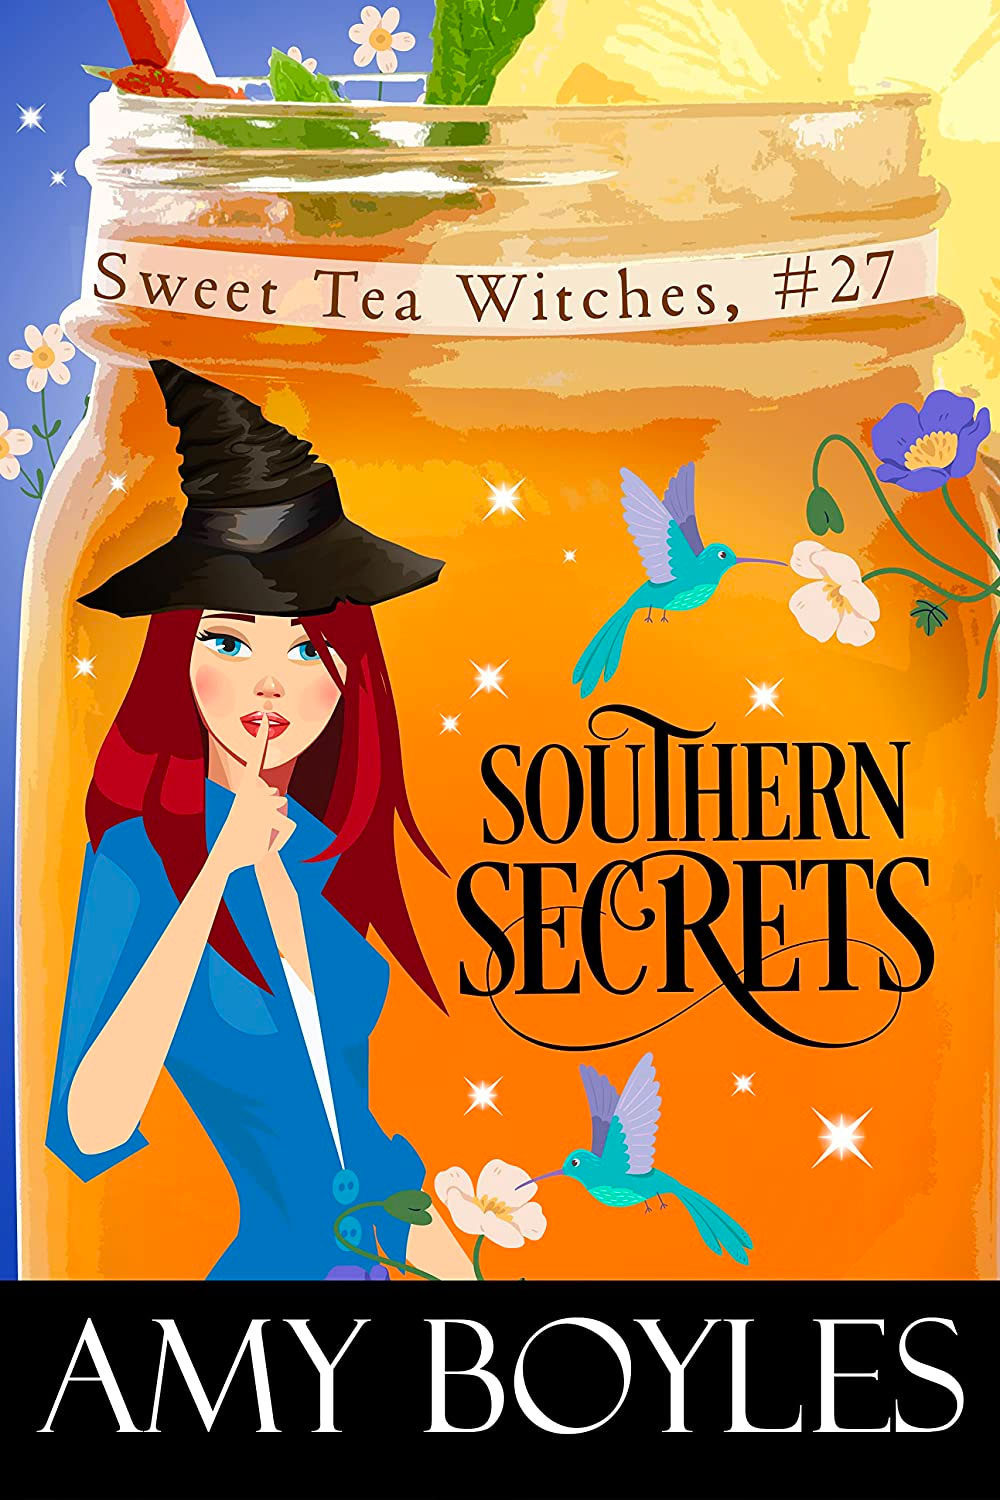 Southern Secrets